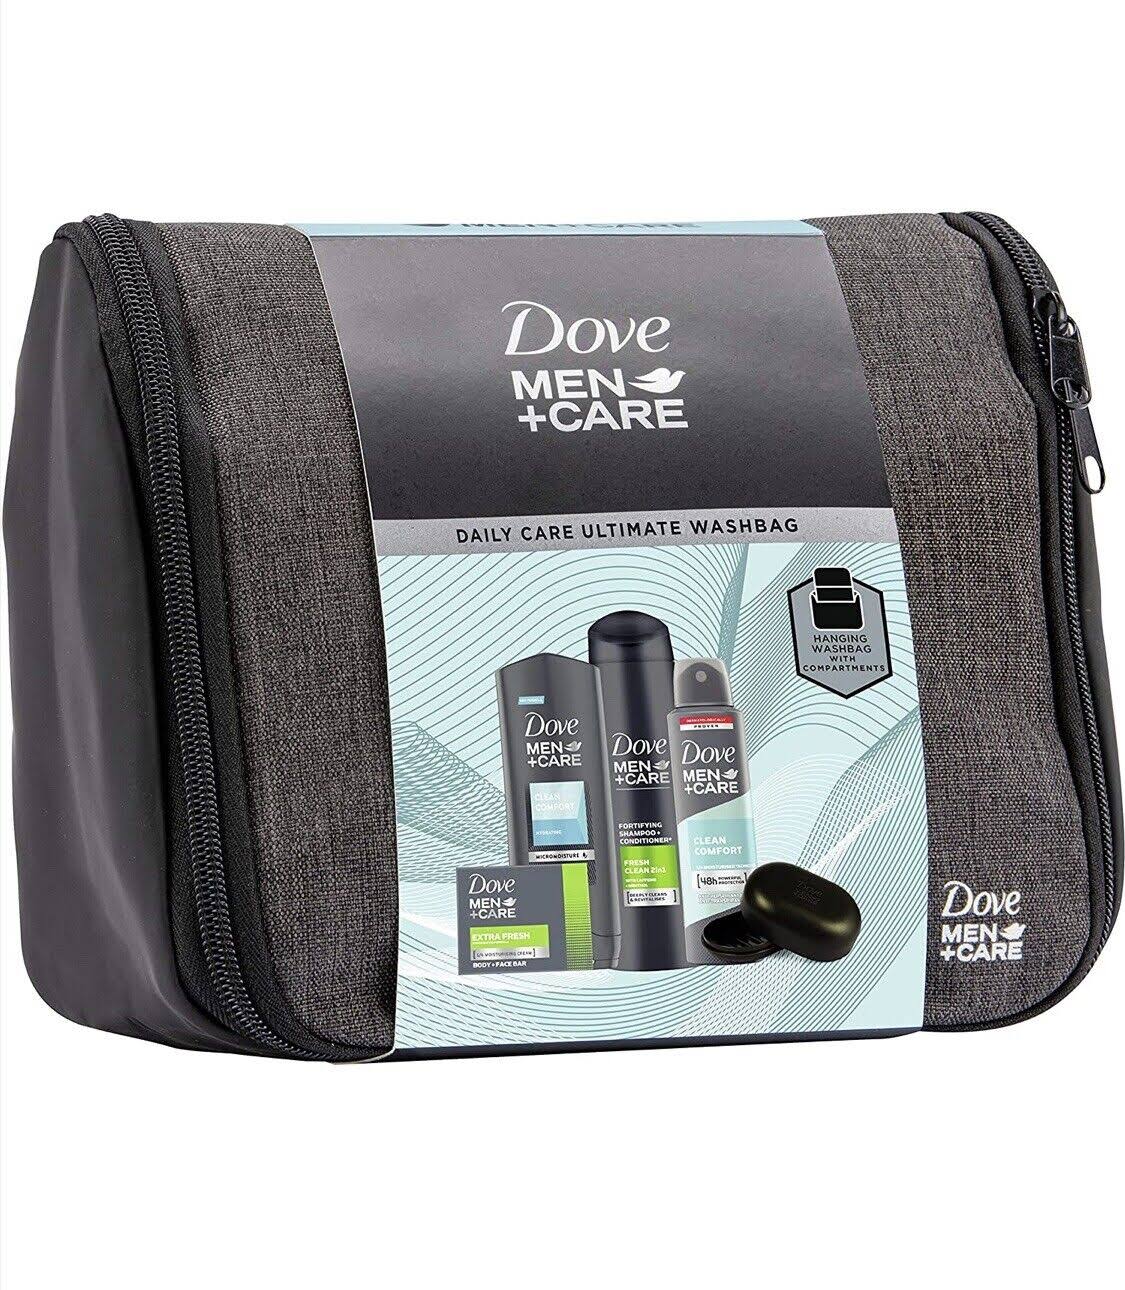 Dove Men+Care Daily Care Ultimate Washbag Gift Set